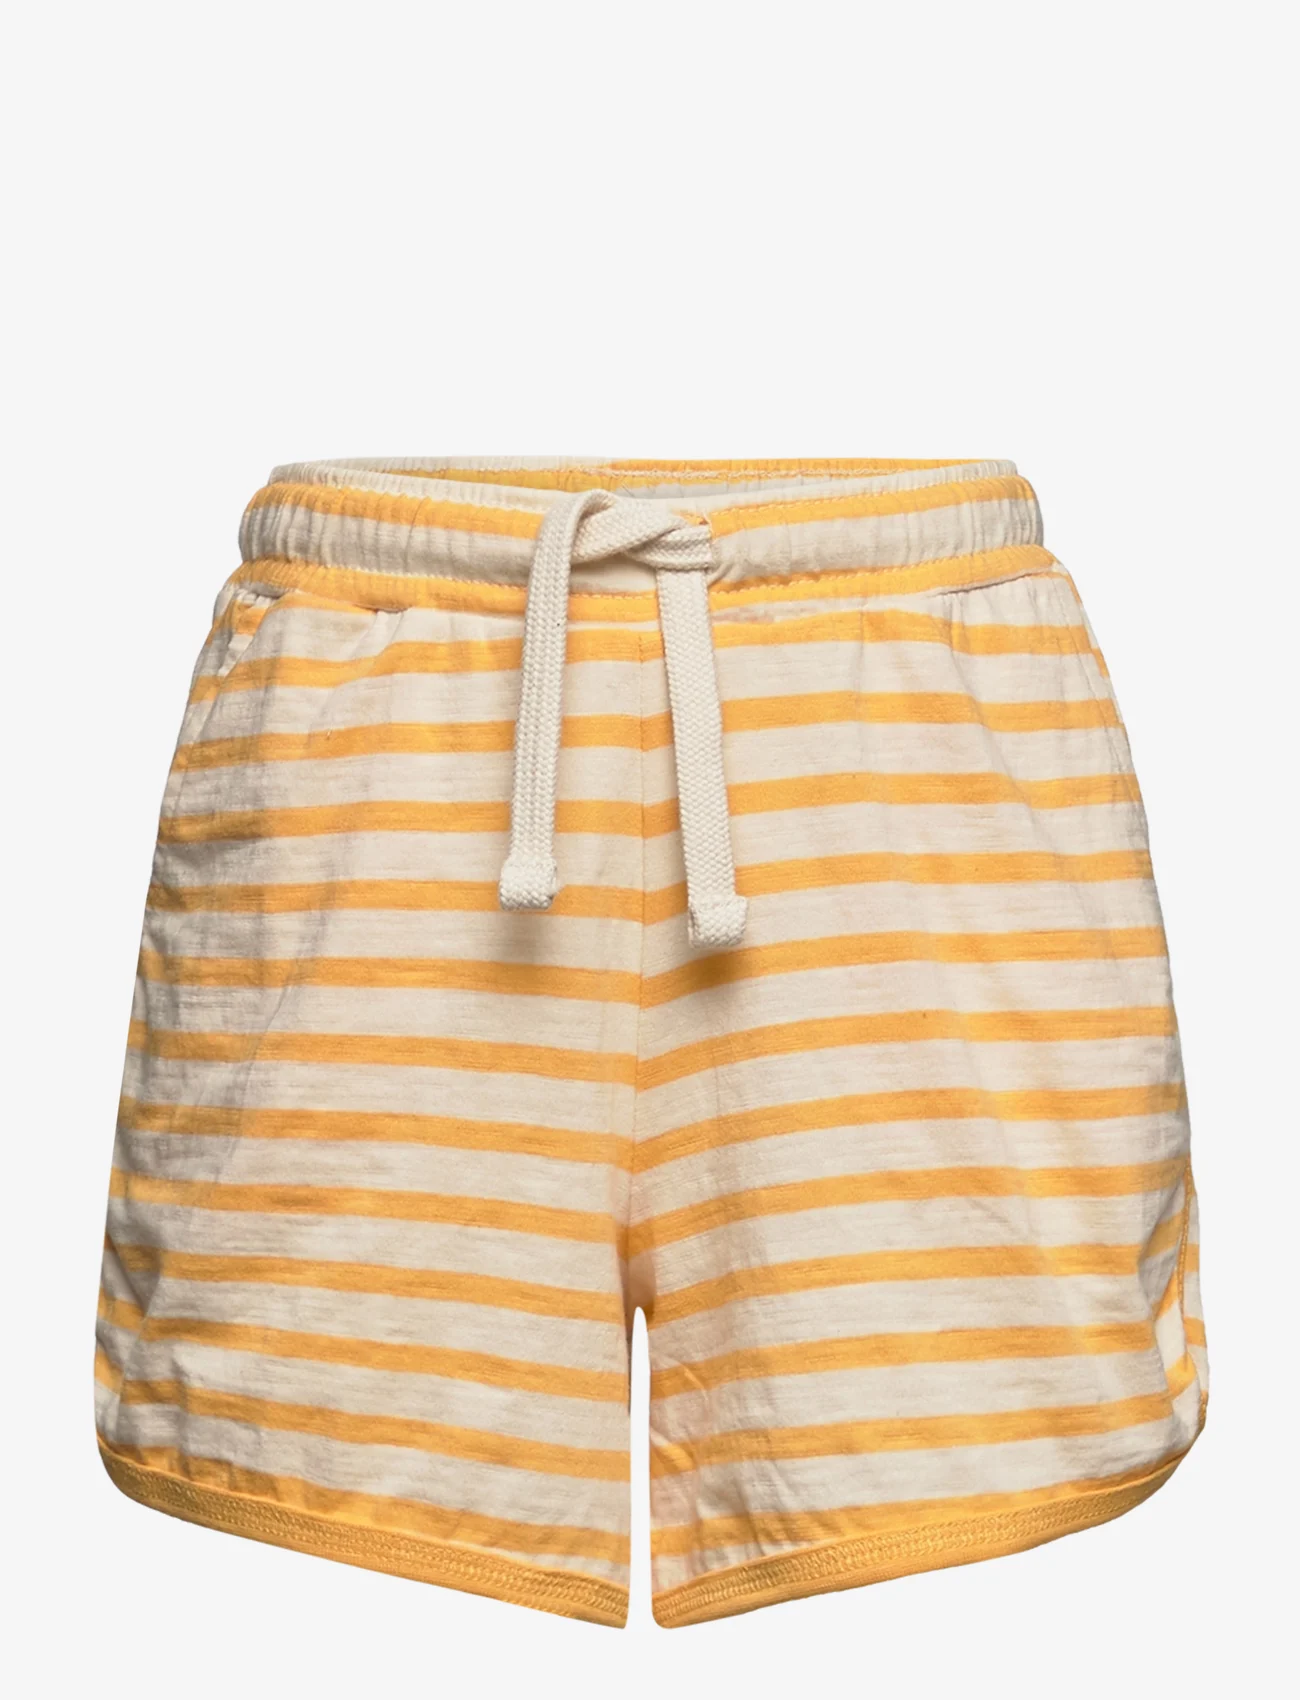 ebbe Kids - Sofia shorts - sweatshorts - yellow stripe - 0